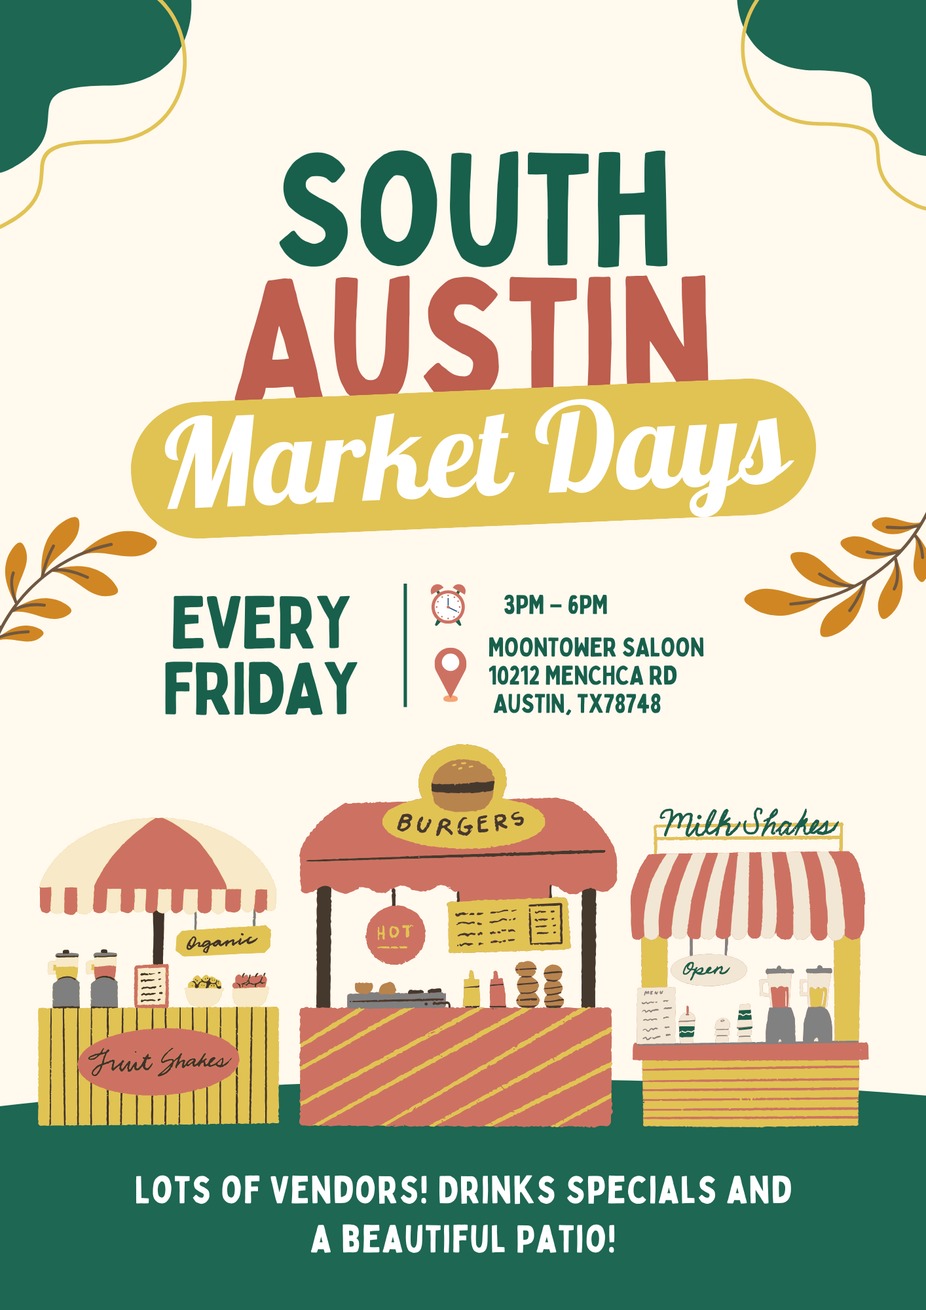 South Austin Market Days event photo